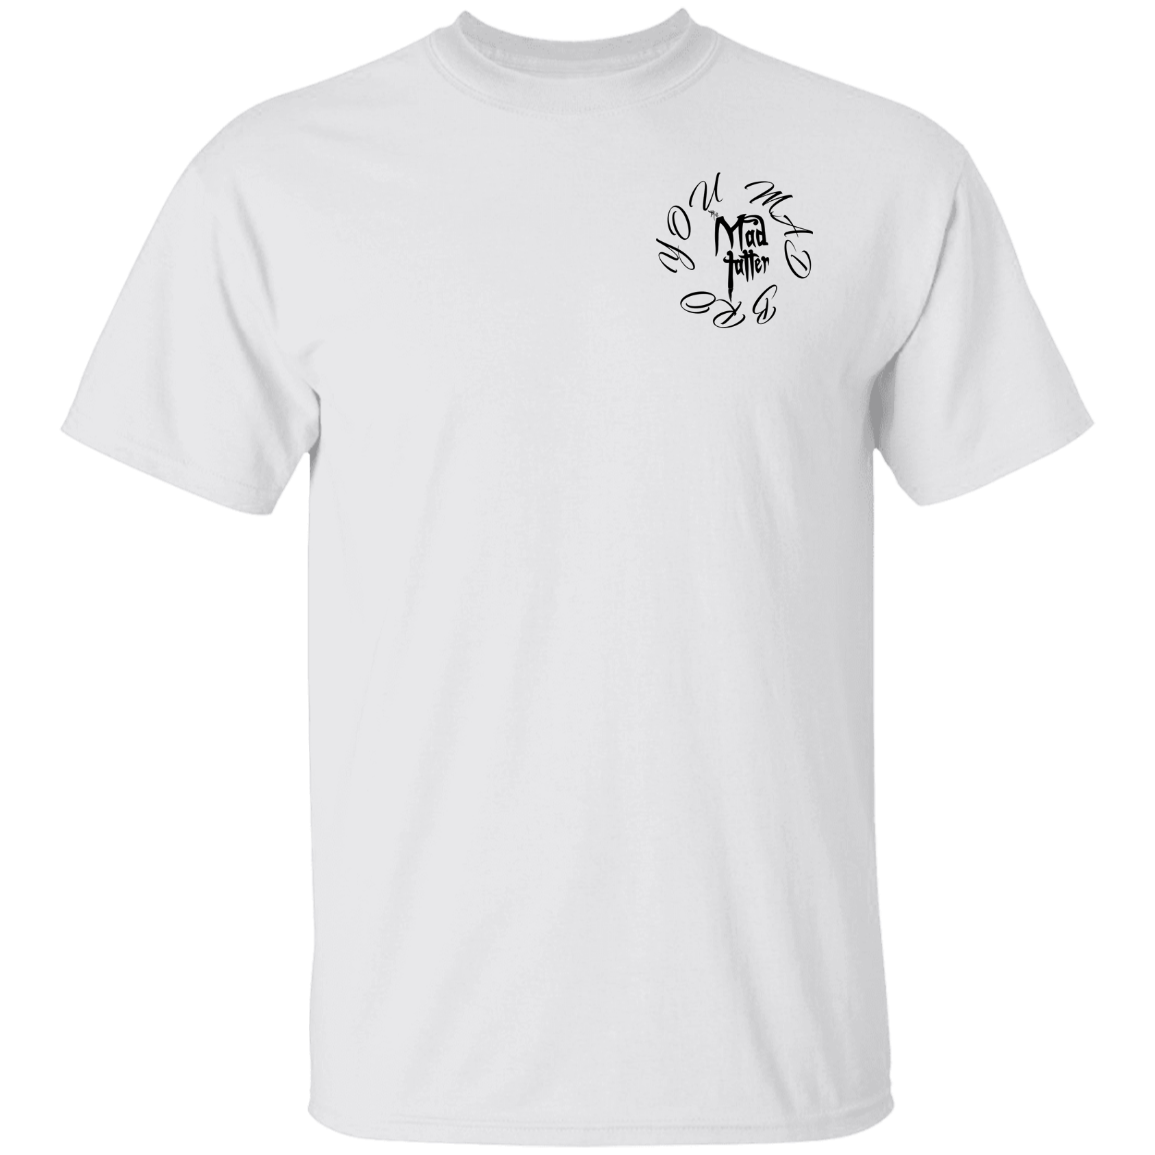 Space Weasel T-Shirt - Black Logo